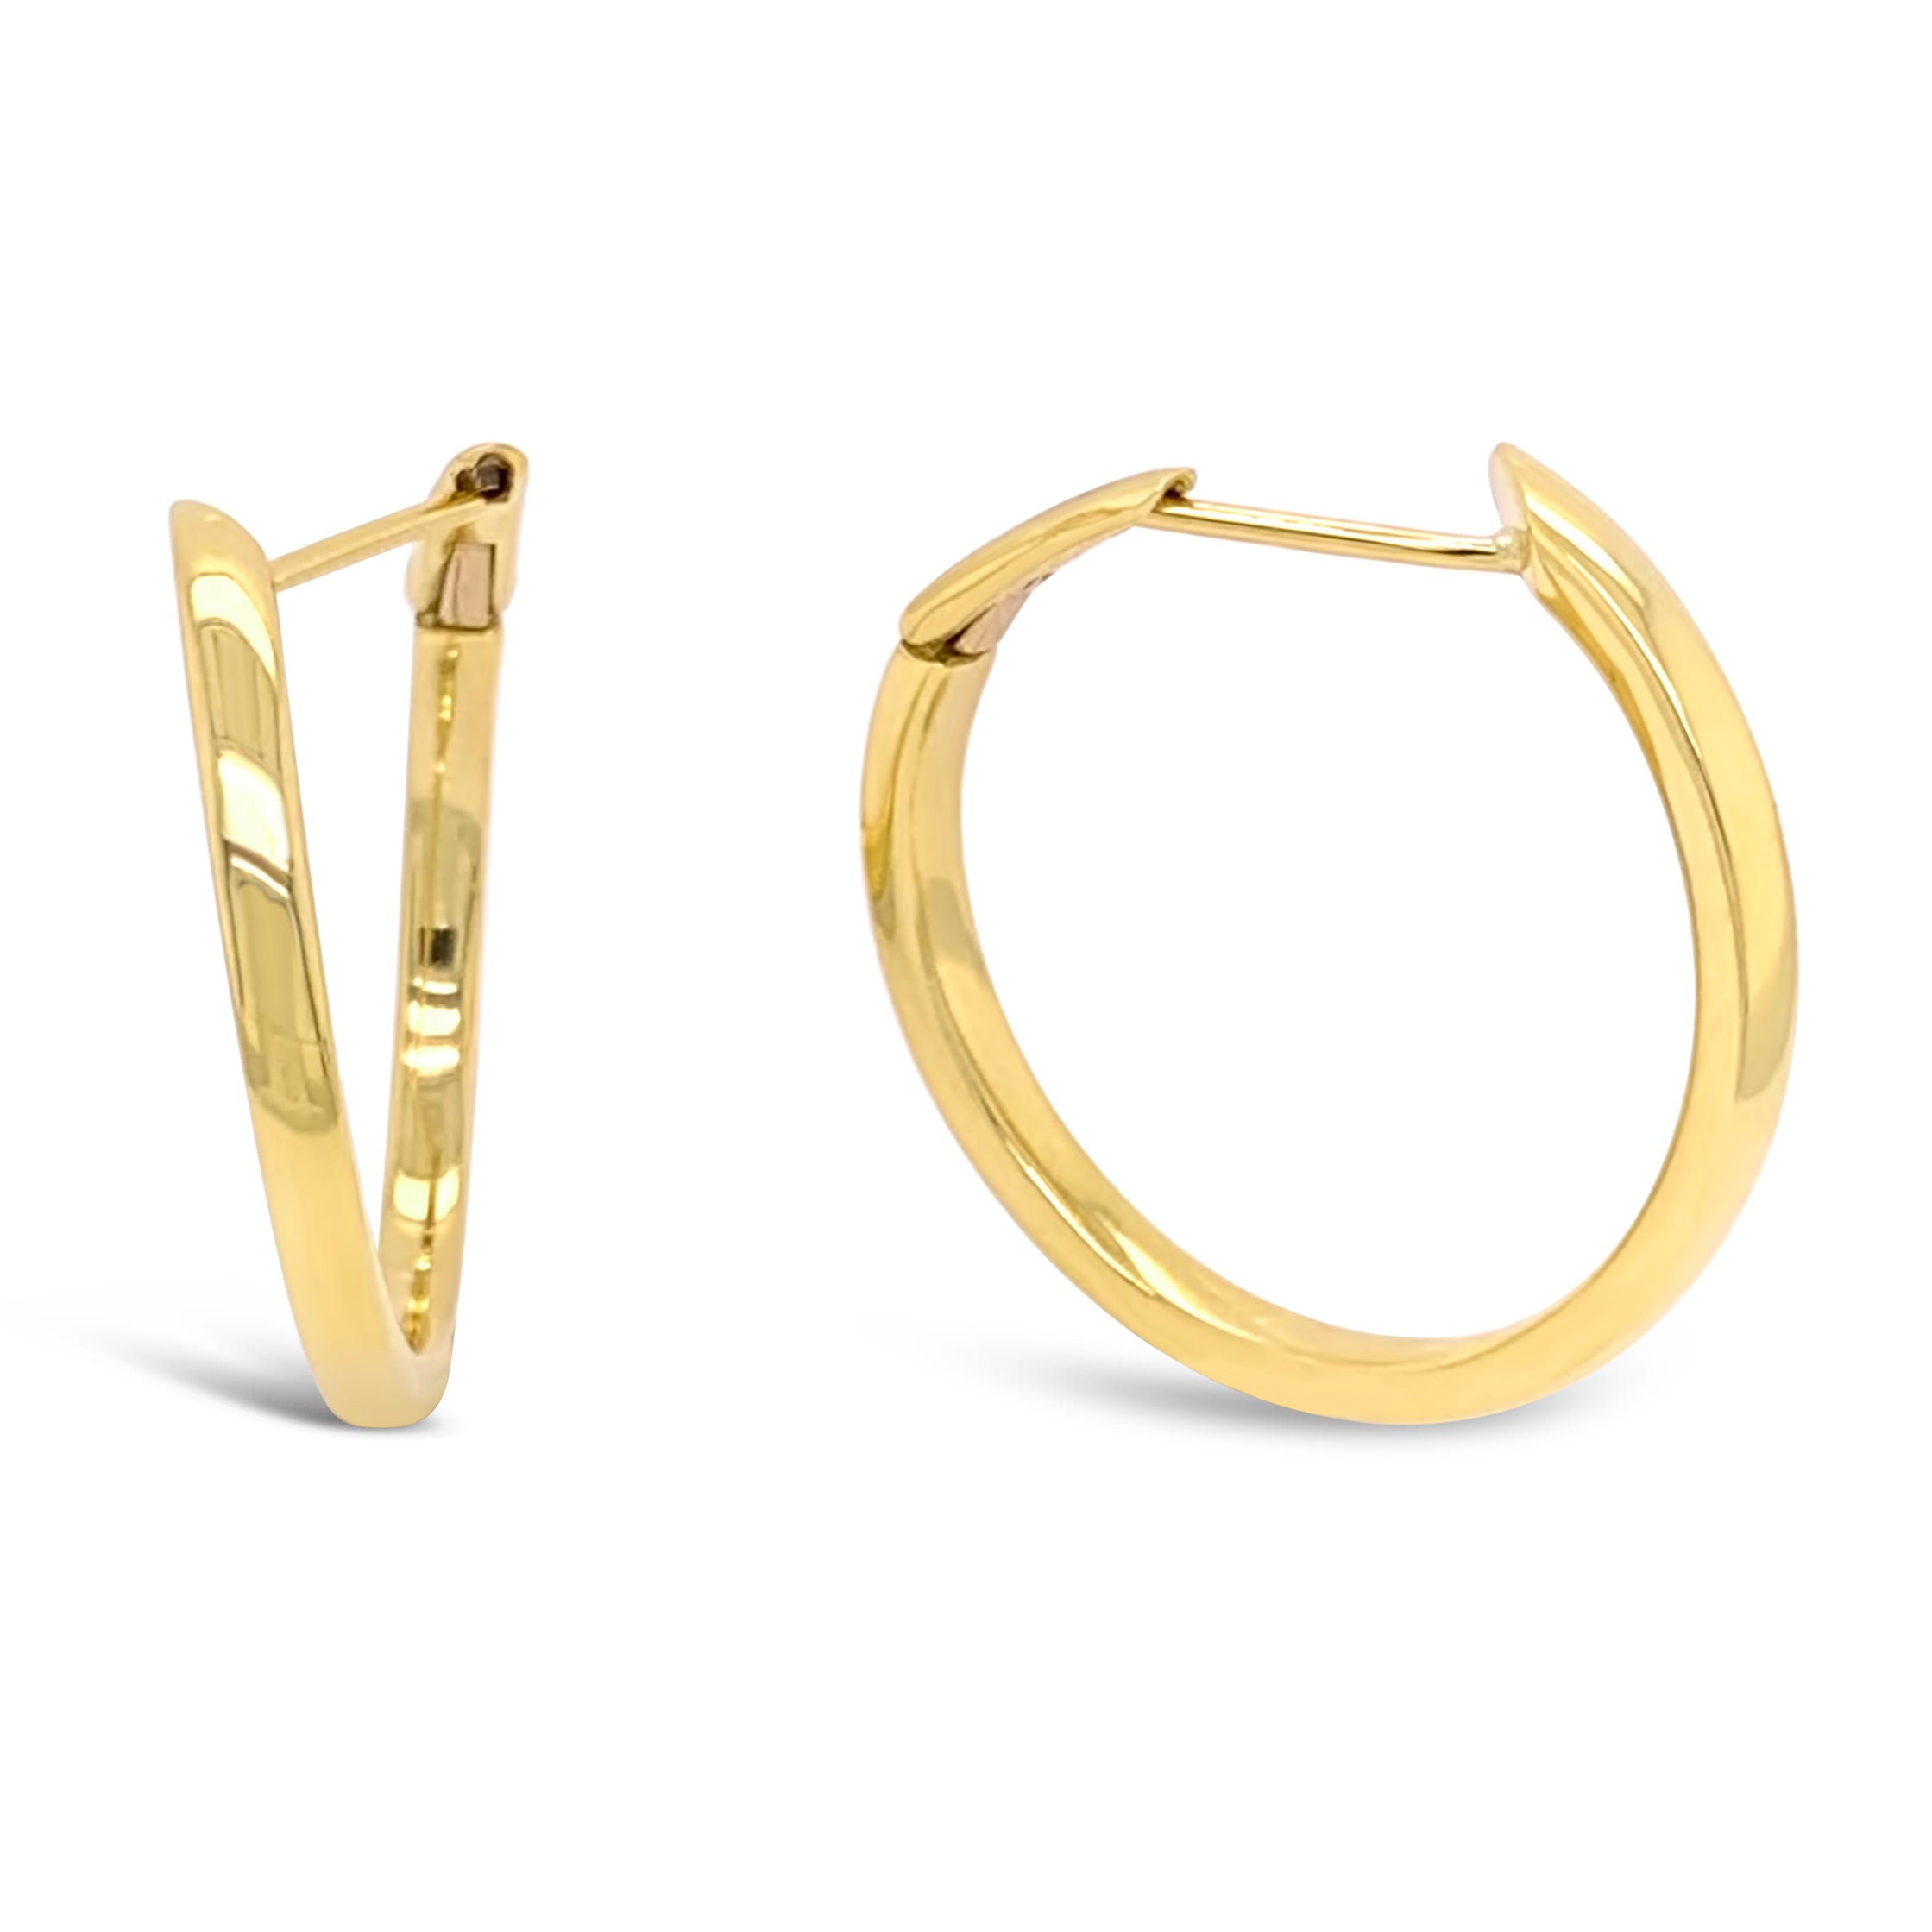 Tilo Jewelry 14K Yellow Gold Round Hoop Earrings with Diamond-Cut Engraving  for Women, Girls, Unisex | 14mm - 0.55 Inch - Walmart.com